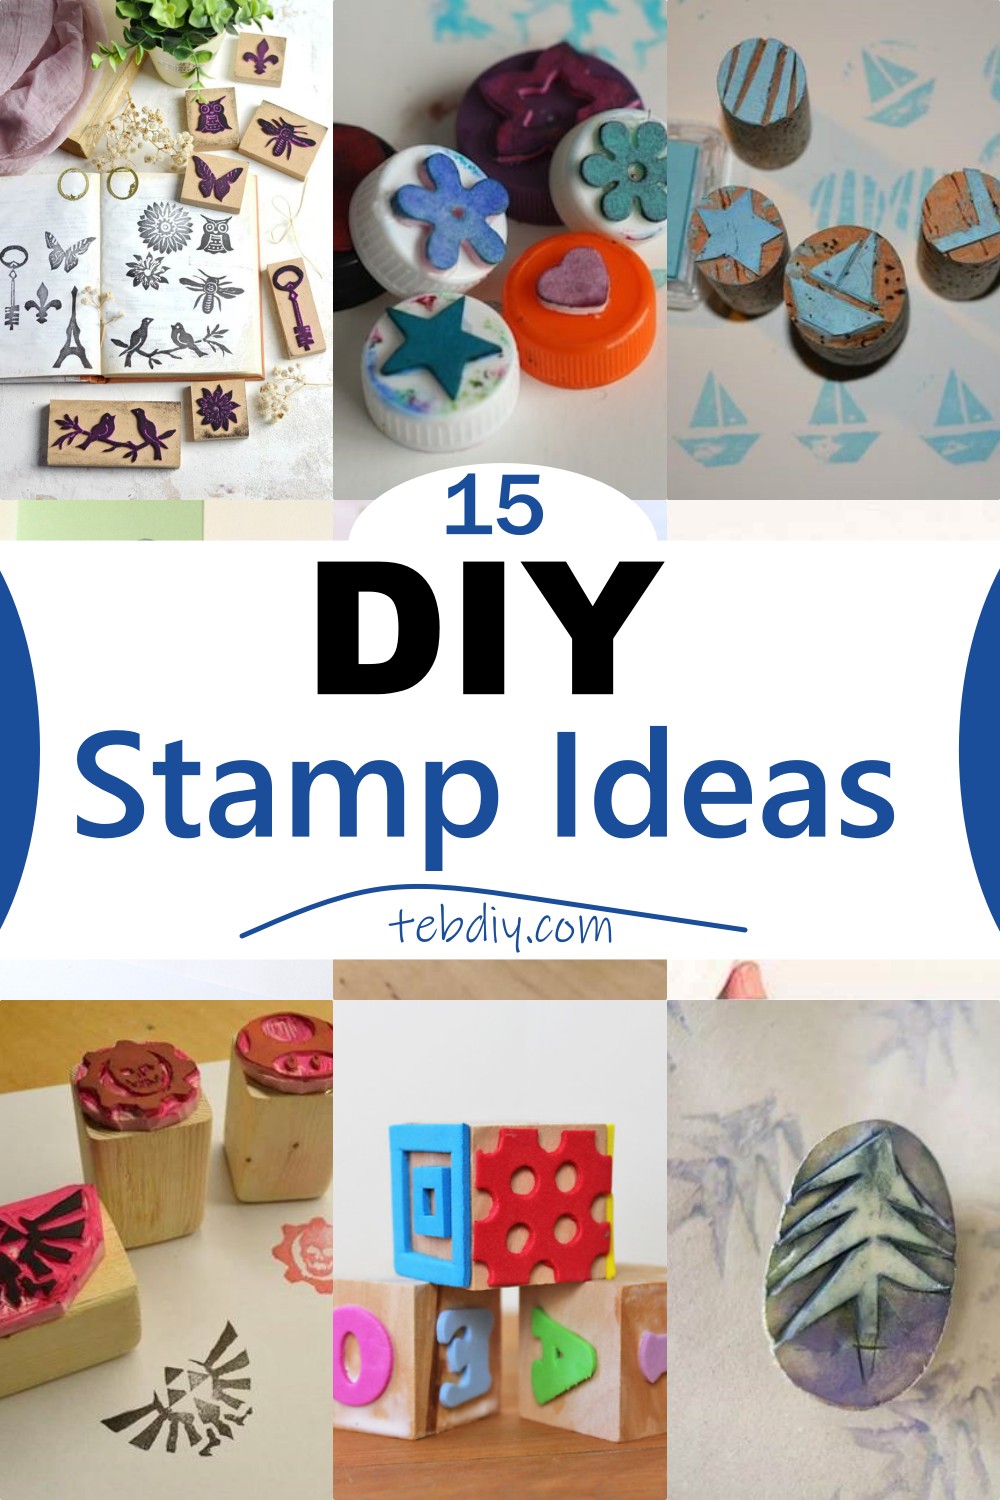 15 DIY Stamp Ideas 